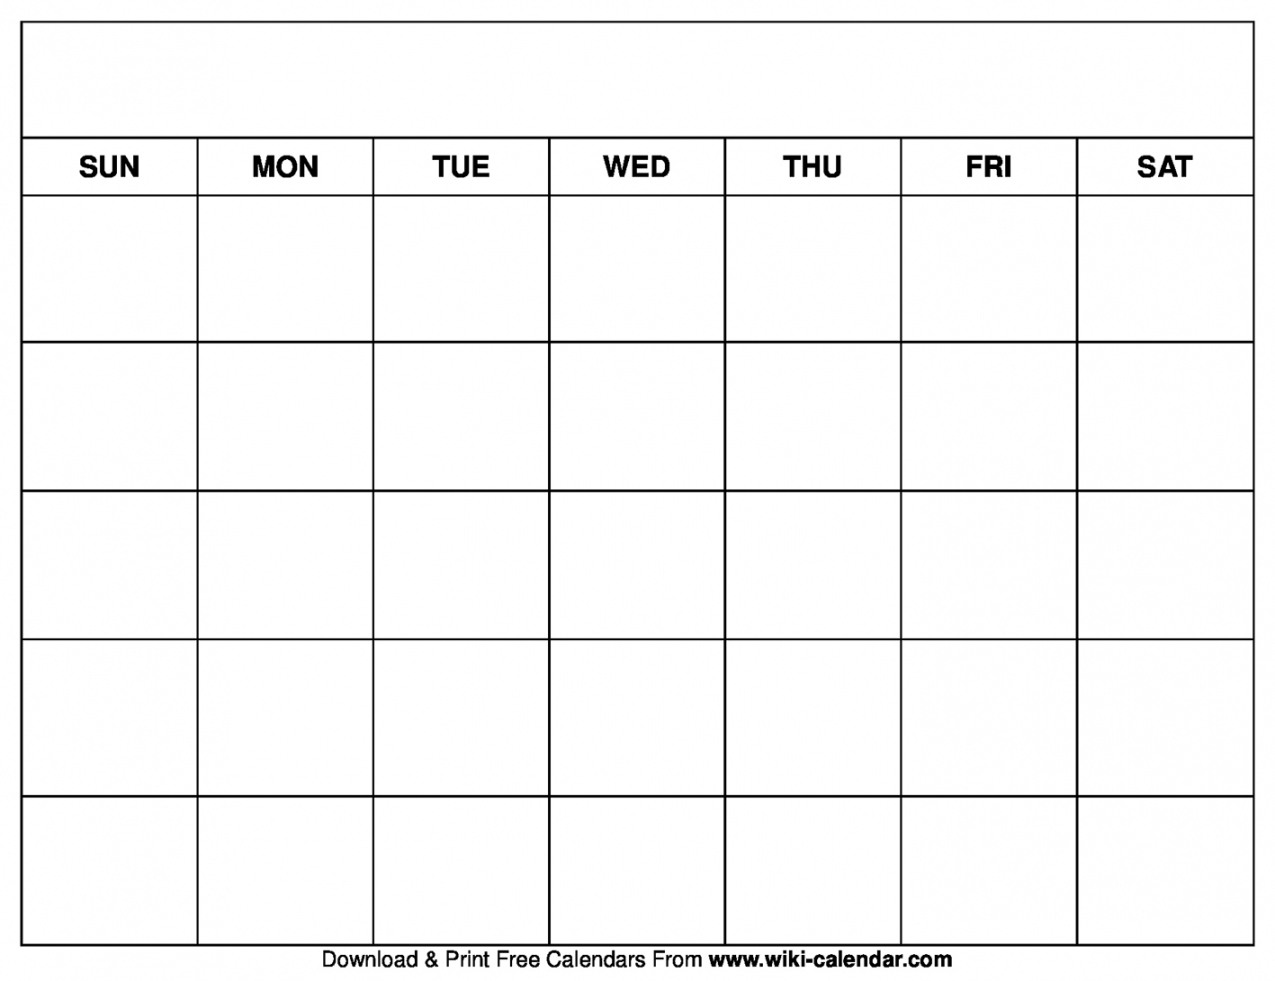 Free Blank Calendar Printables - Printable - Printable Blank Calendar Templates - Wiki Calendar